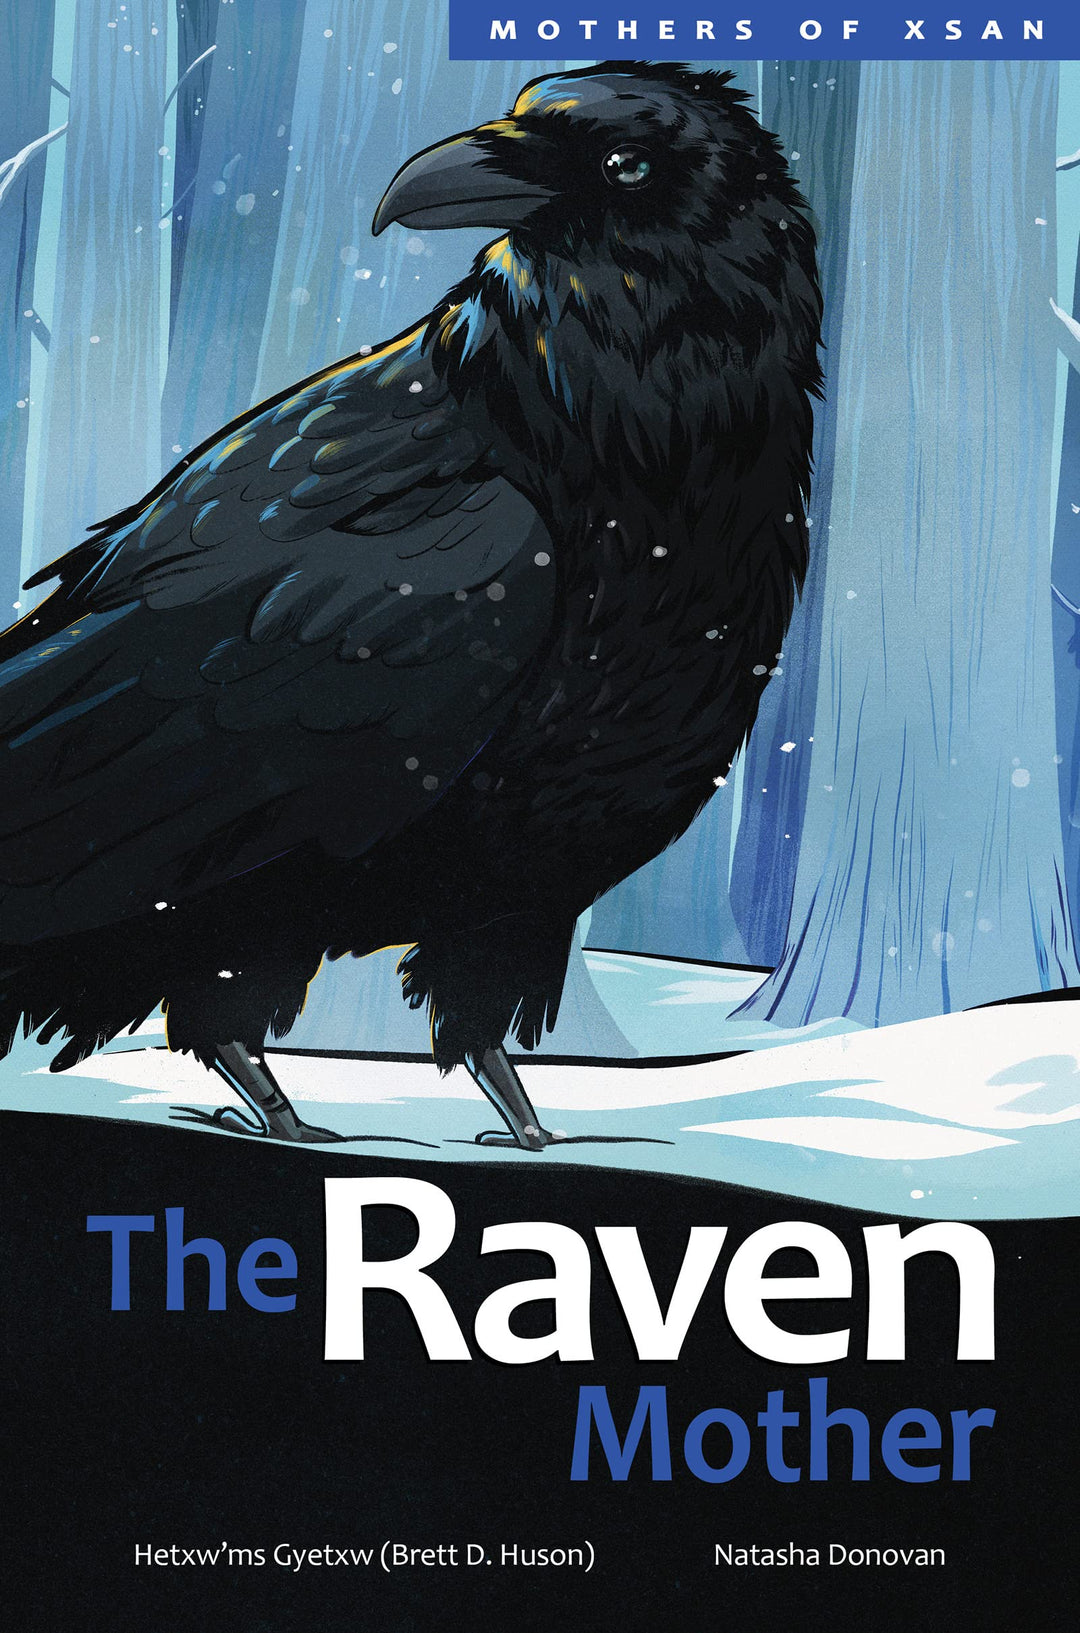 Mothers of Xsan #6: The Raven Mother by Brett D. Huson